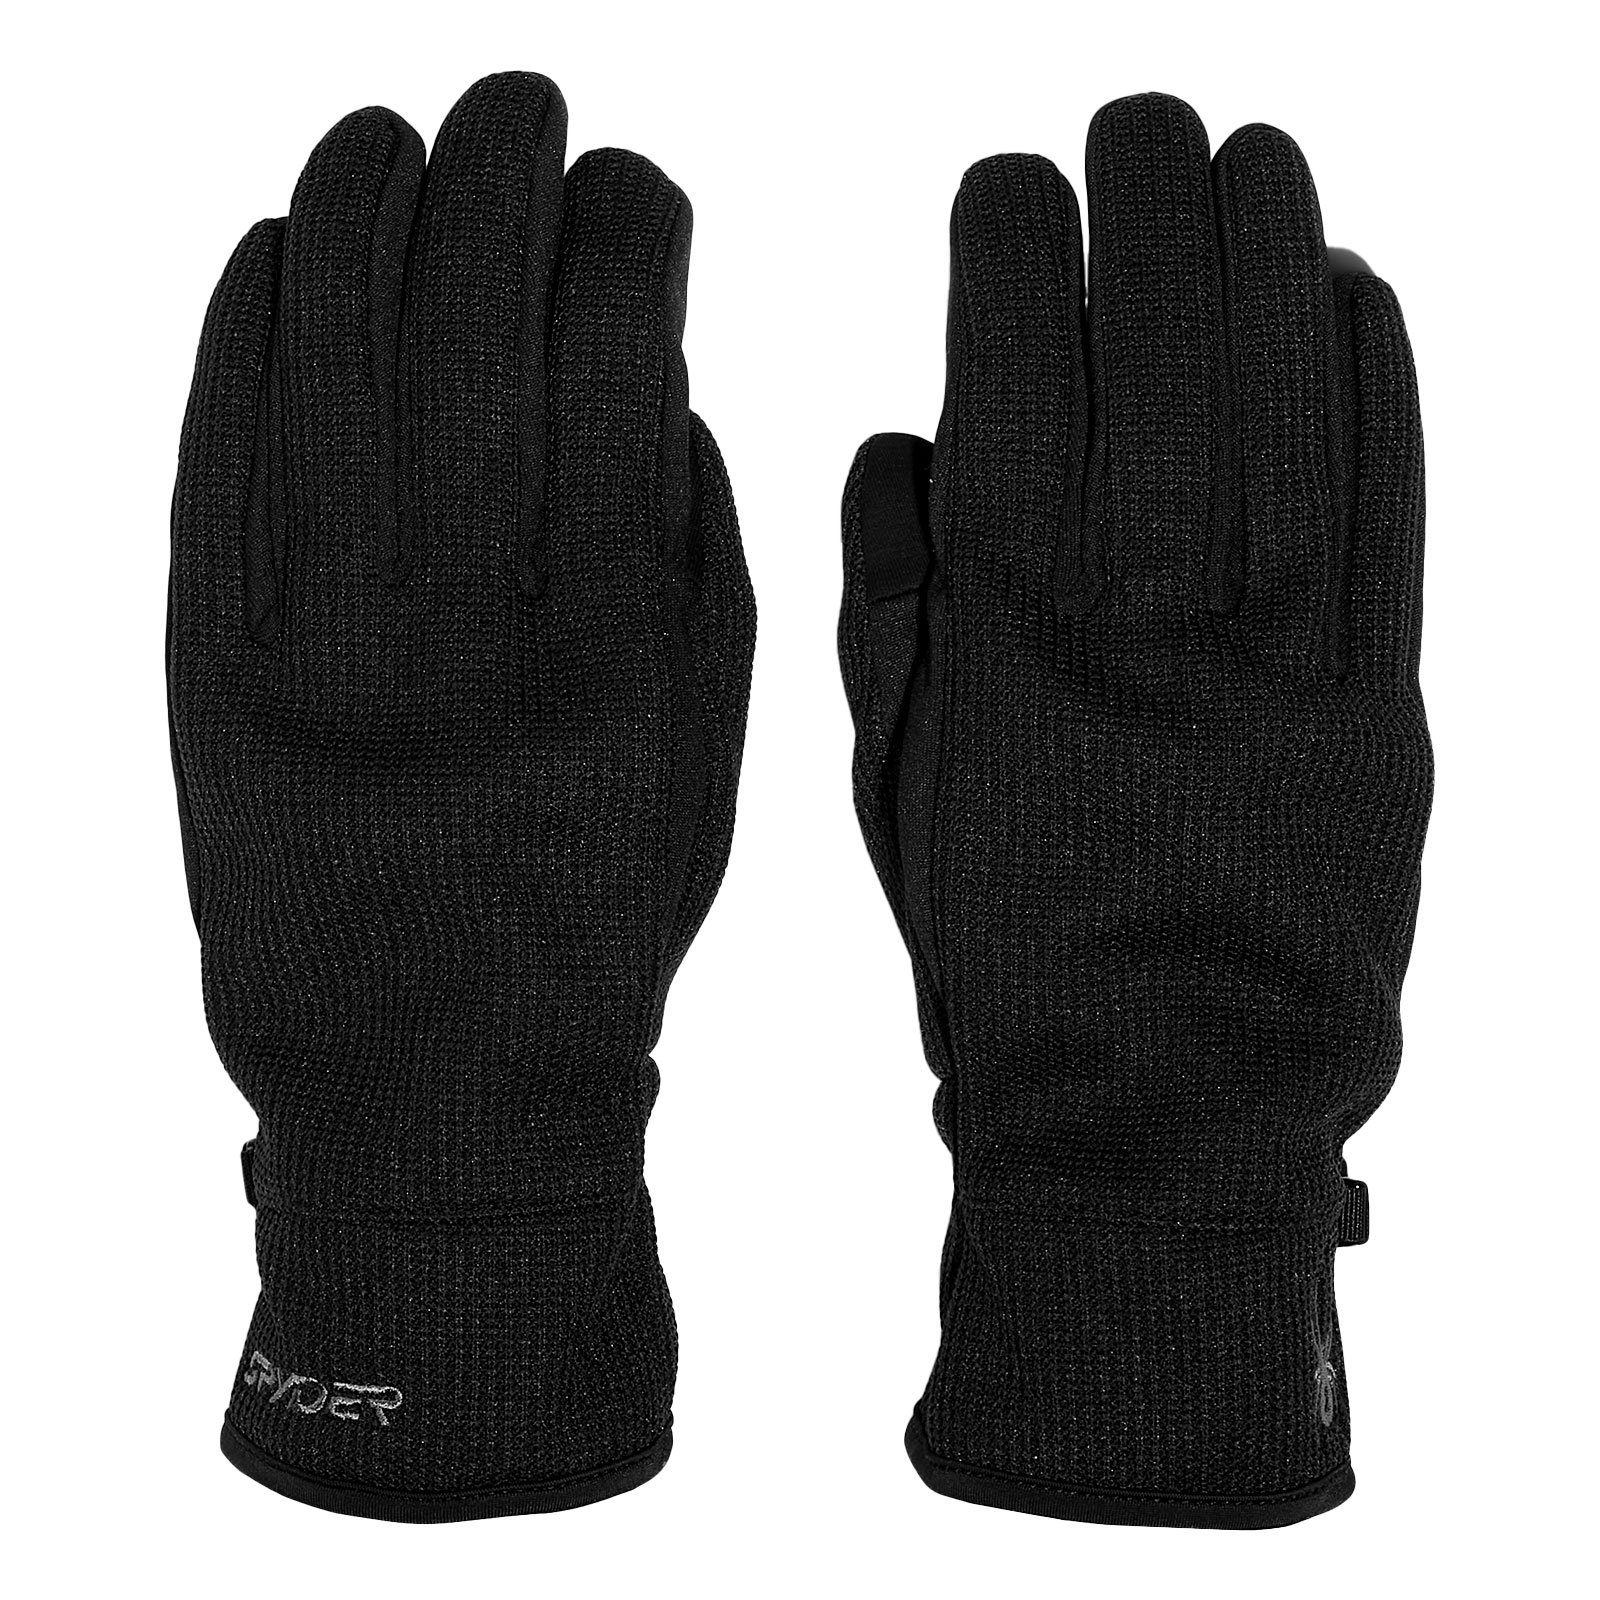 Skihandschuhe Glove mit kompatiblen Spyder Touchscreen Bandit Fingerspitzen